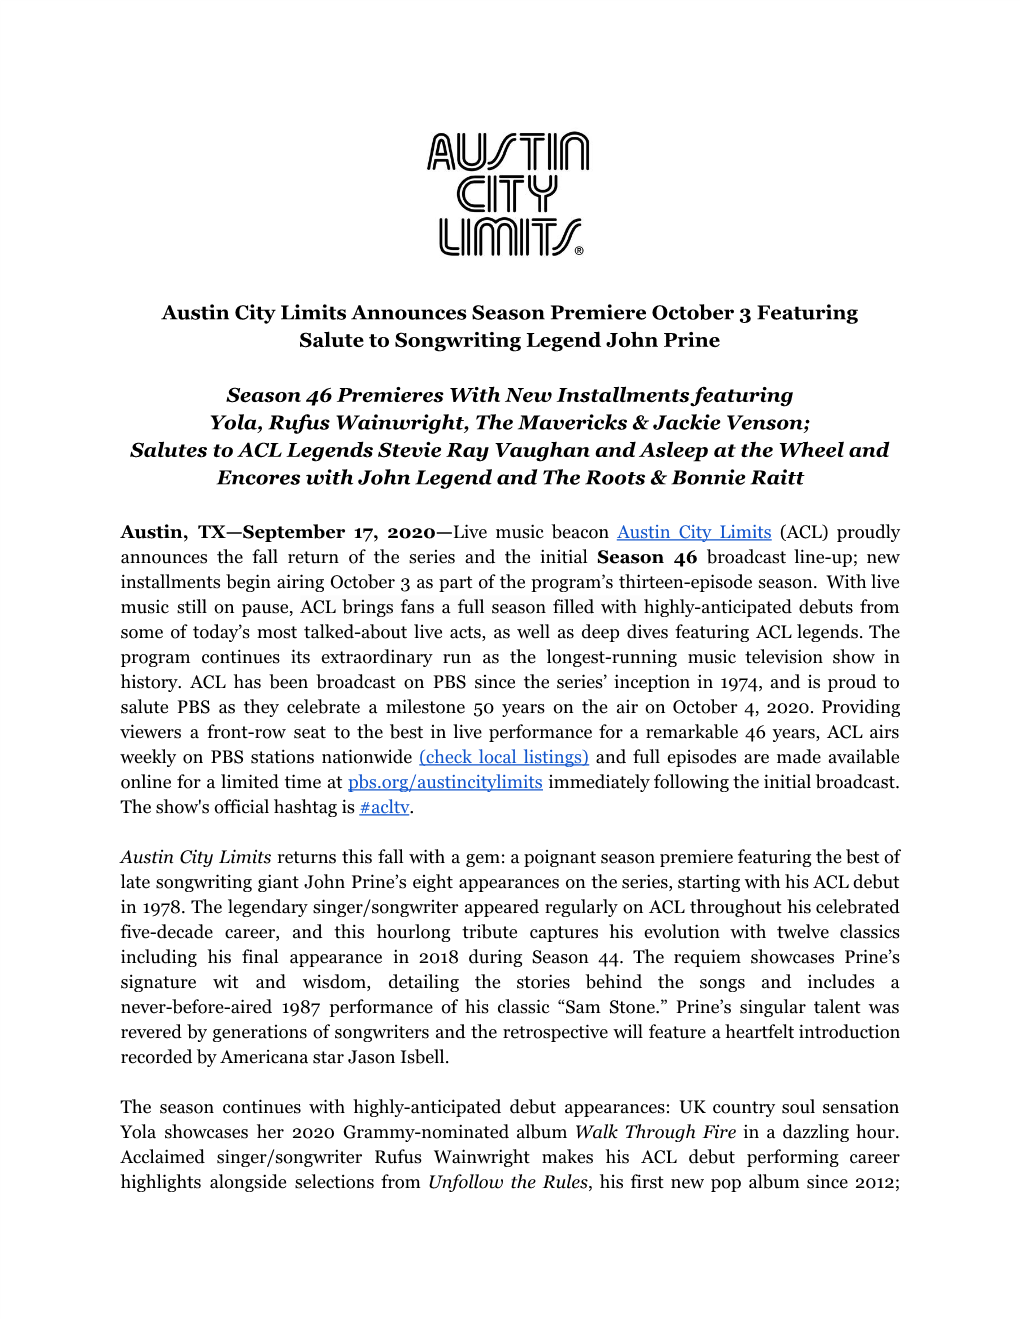 Austin City Limits Announces Season Premiere October 3 Featuring Salute to Songwriting Legend John Prine